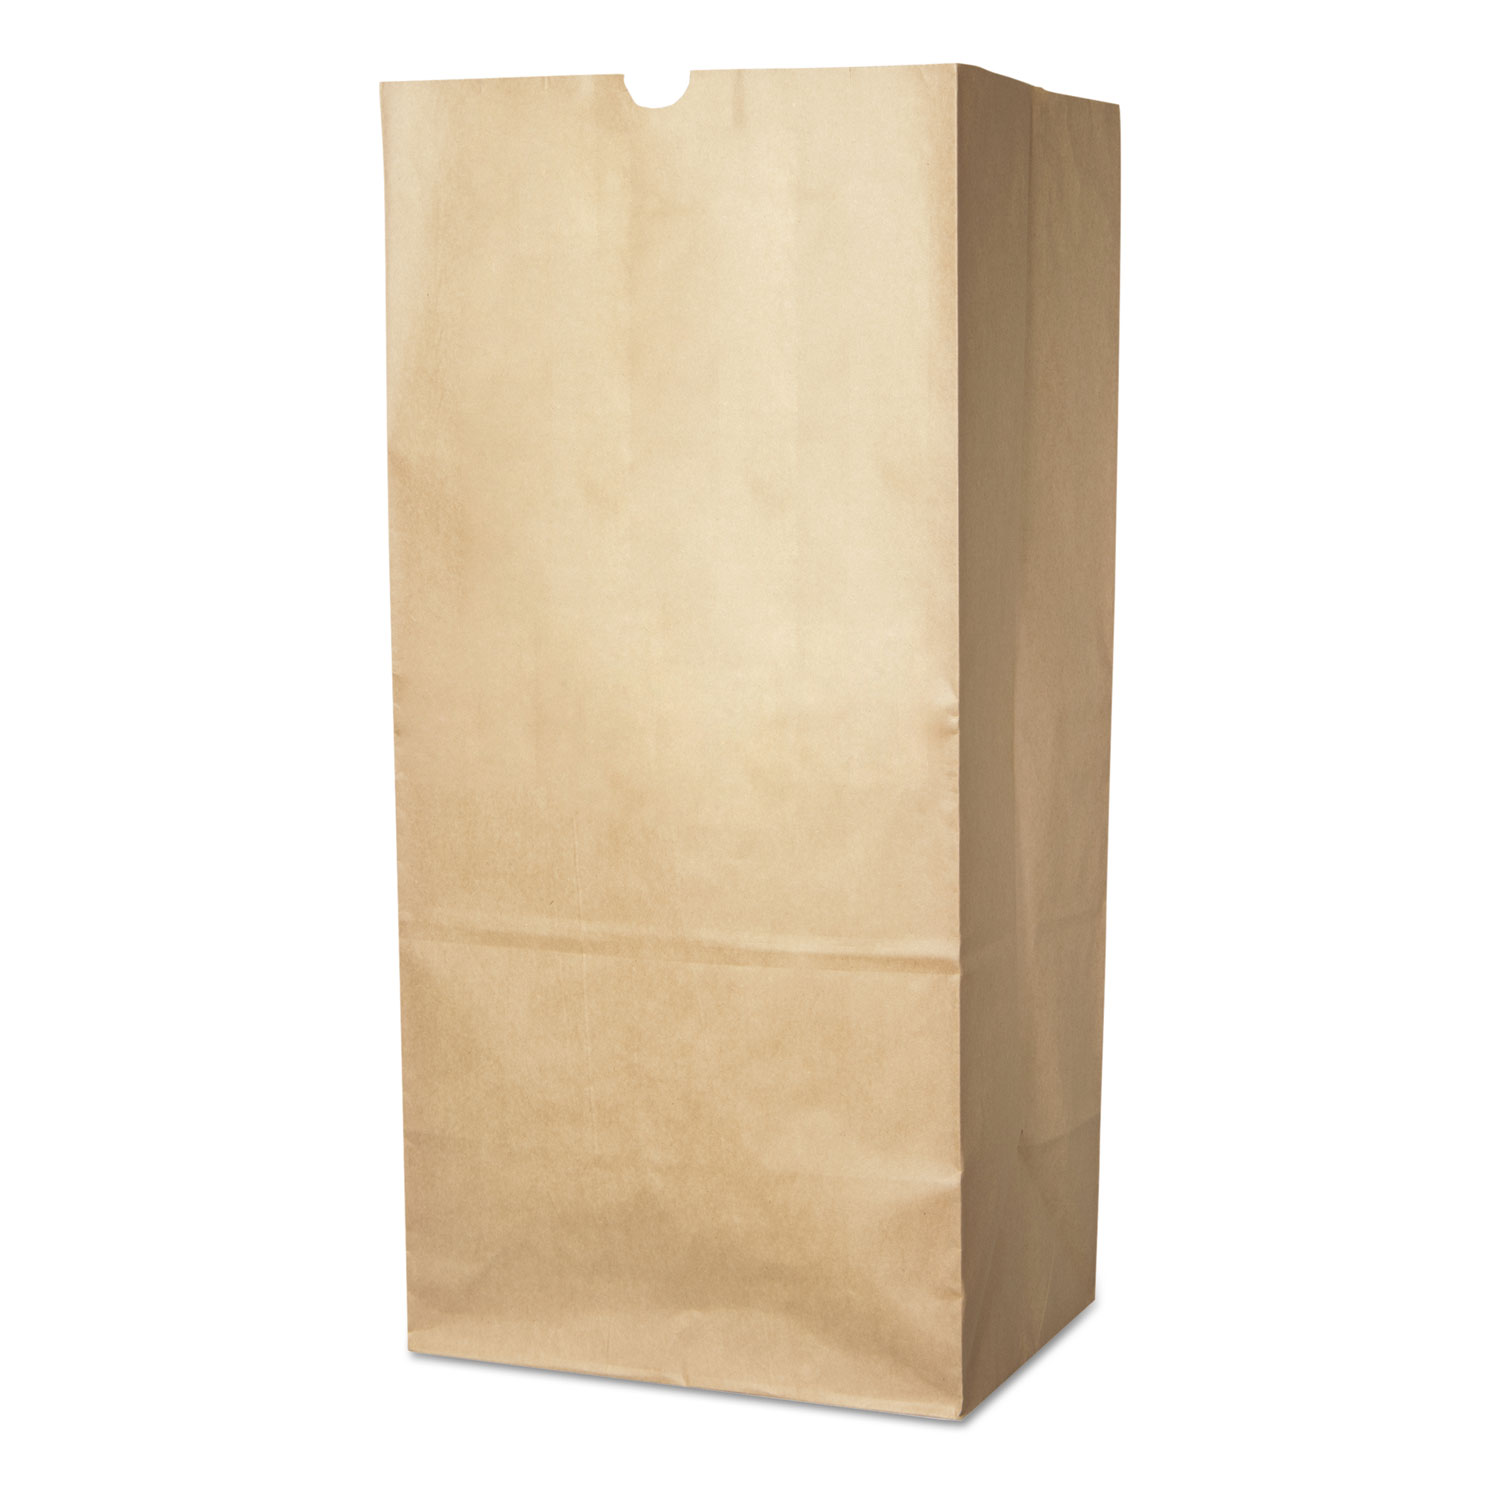  Duro Bag 13818 Lawn and Leaf Self-Standing Bags, 30 gal, 16 x 35, Kraft Brown, 50/Carton (DRO13818) 